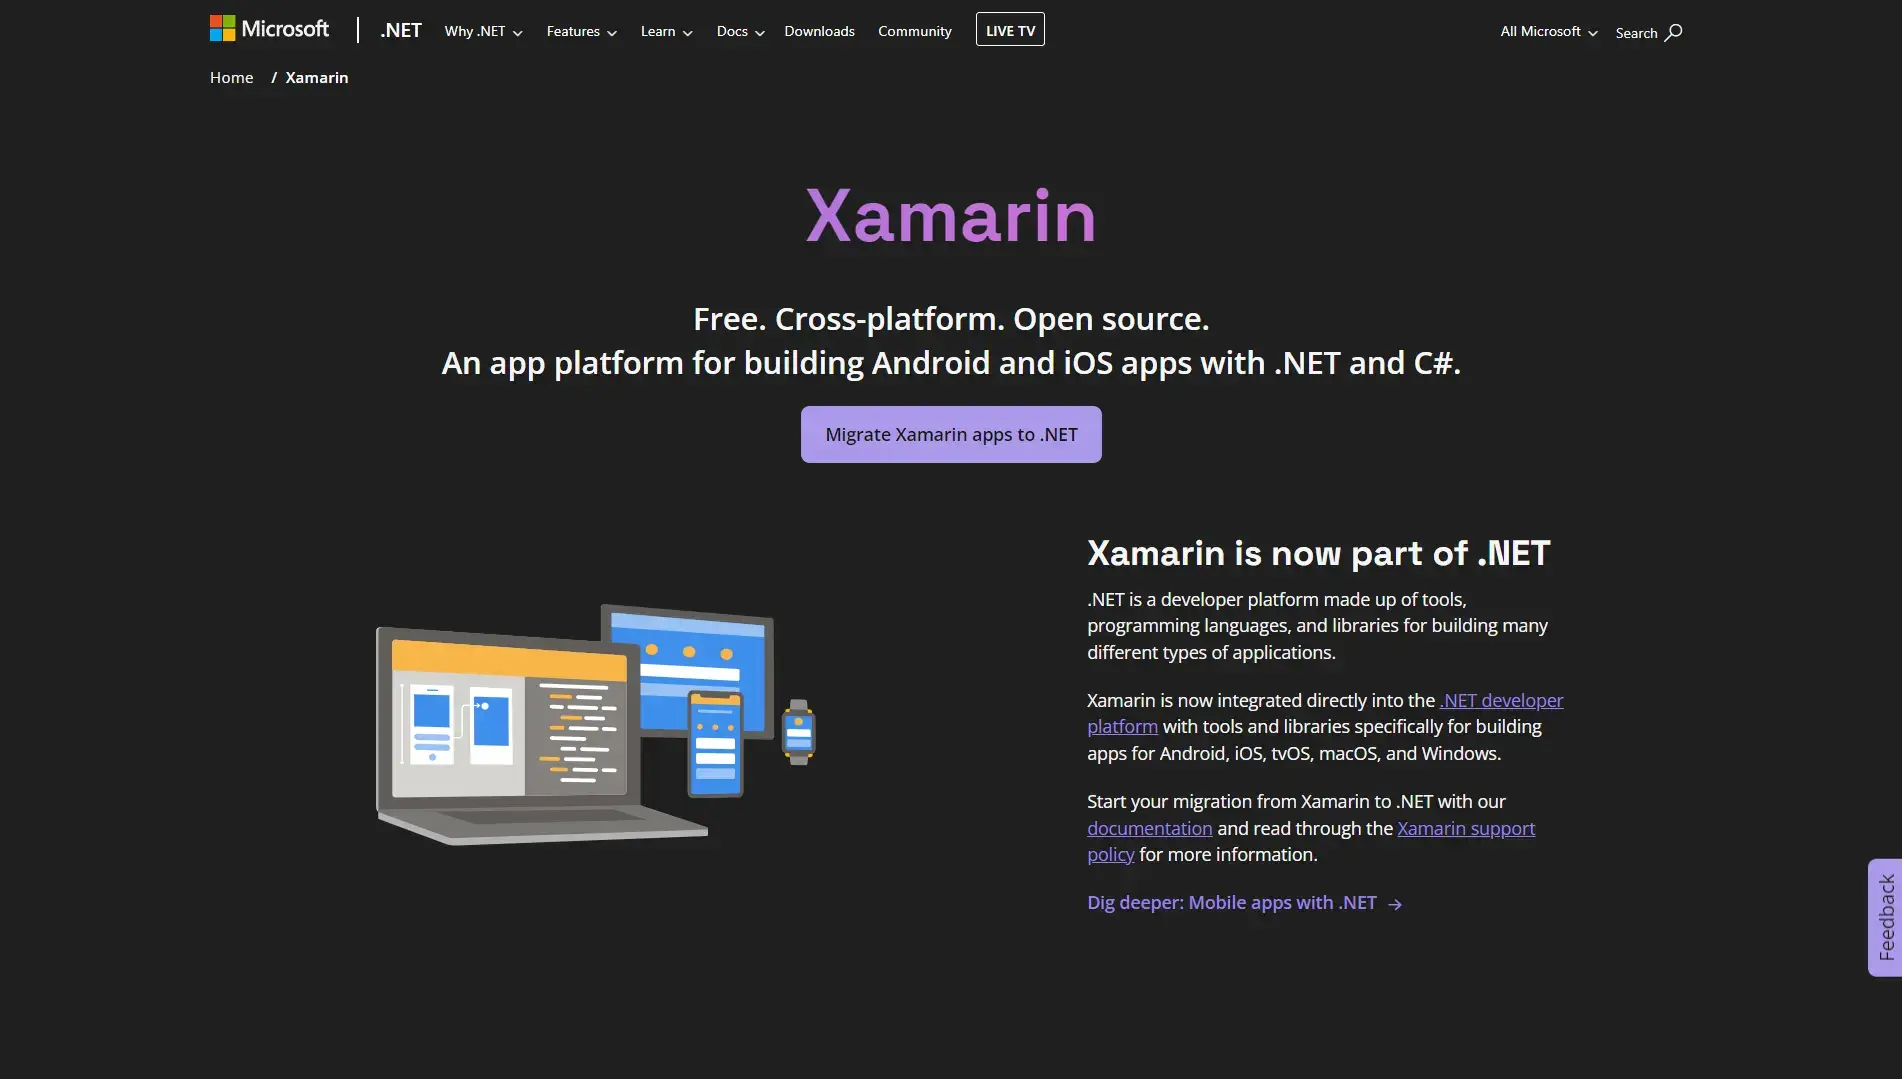 Image of Xamarin's website homepage.